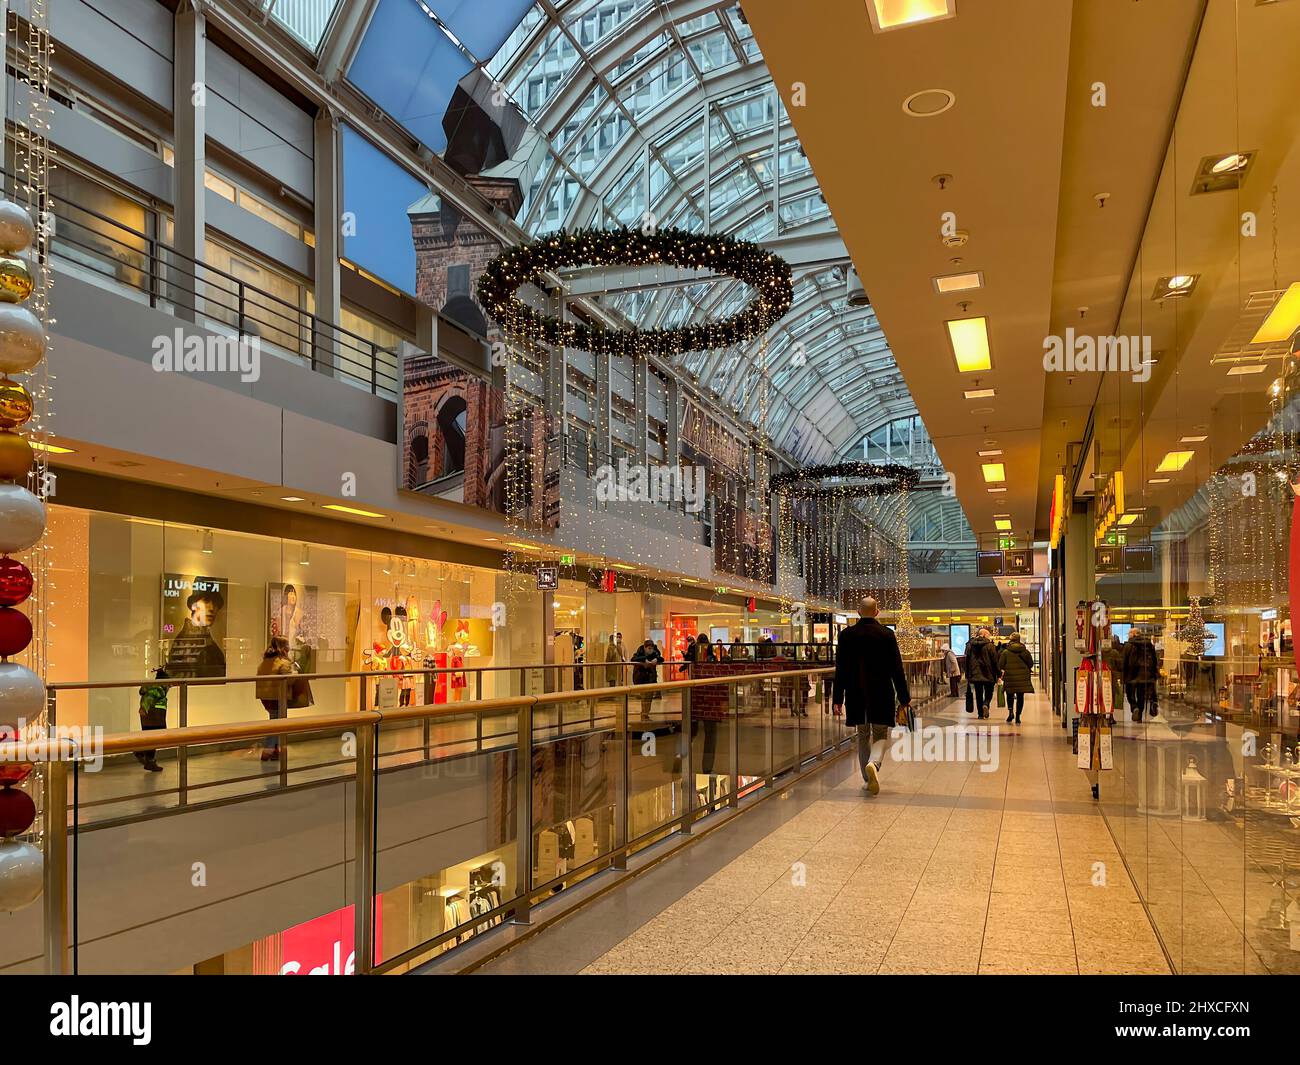 Interior view of Hamburger Meile shopping center, Hamburg, Germany, Europe Stock Photo